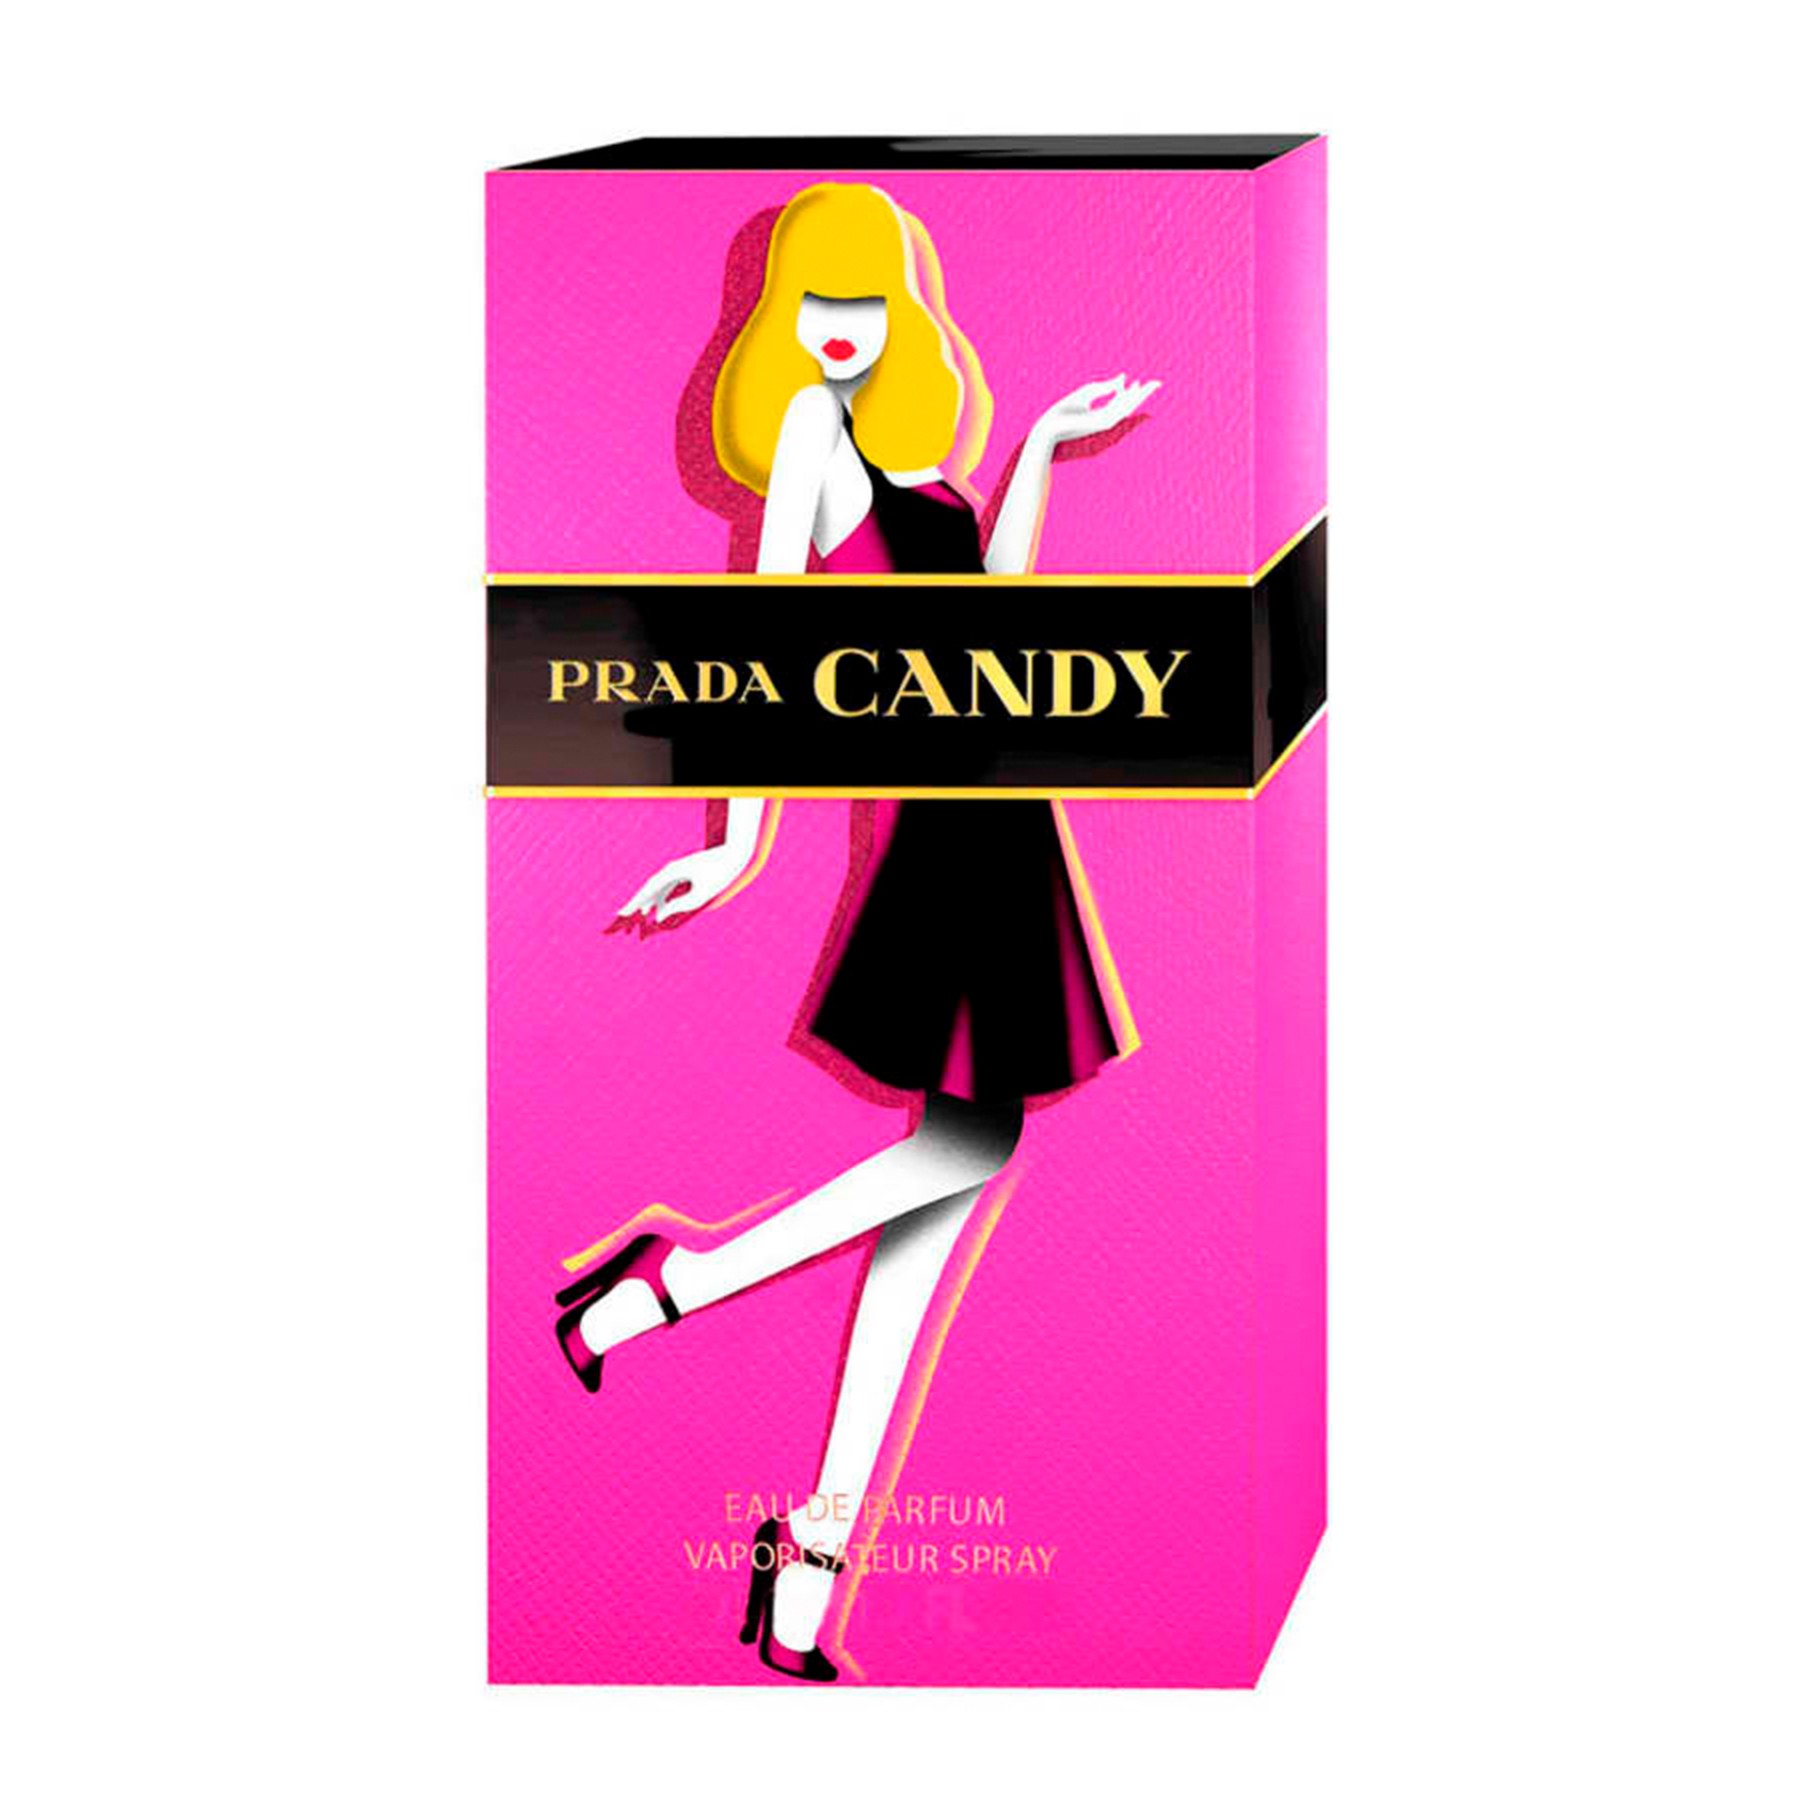 Prada Candy Perfume Feminino Eau de Parfum 30ml - DOLCE VITA